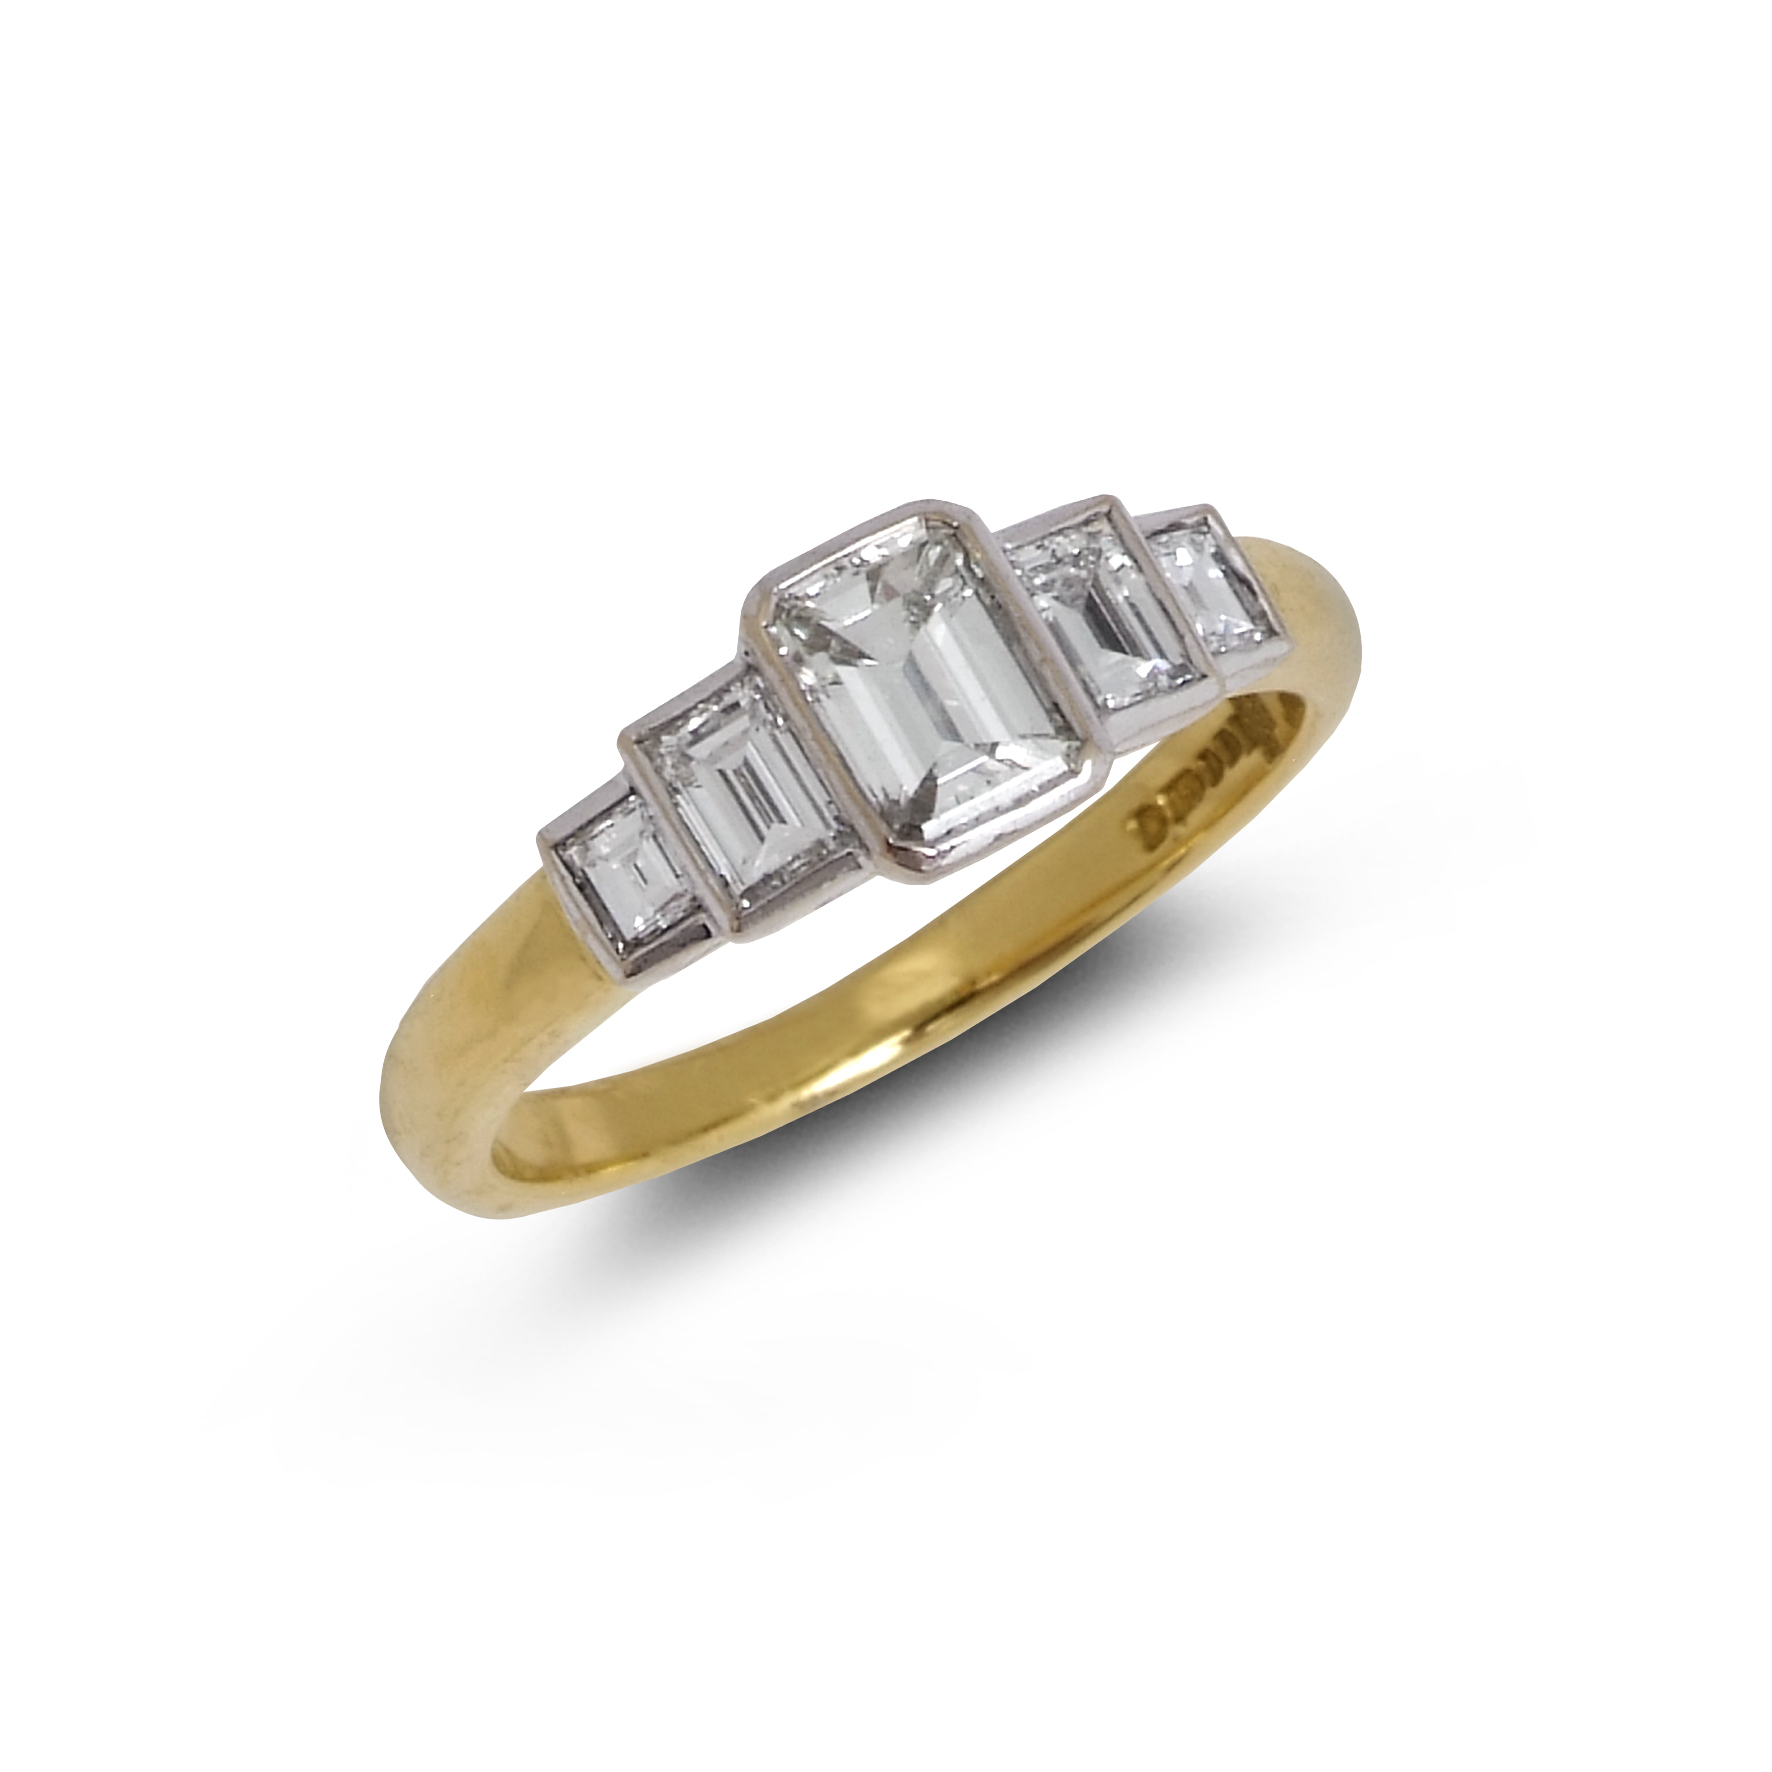 Vintage emerald-cut diamond five-stone ring